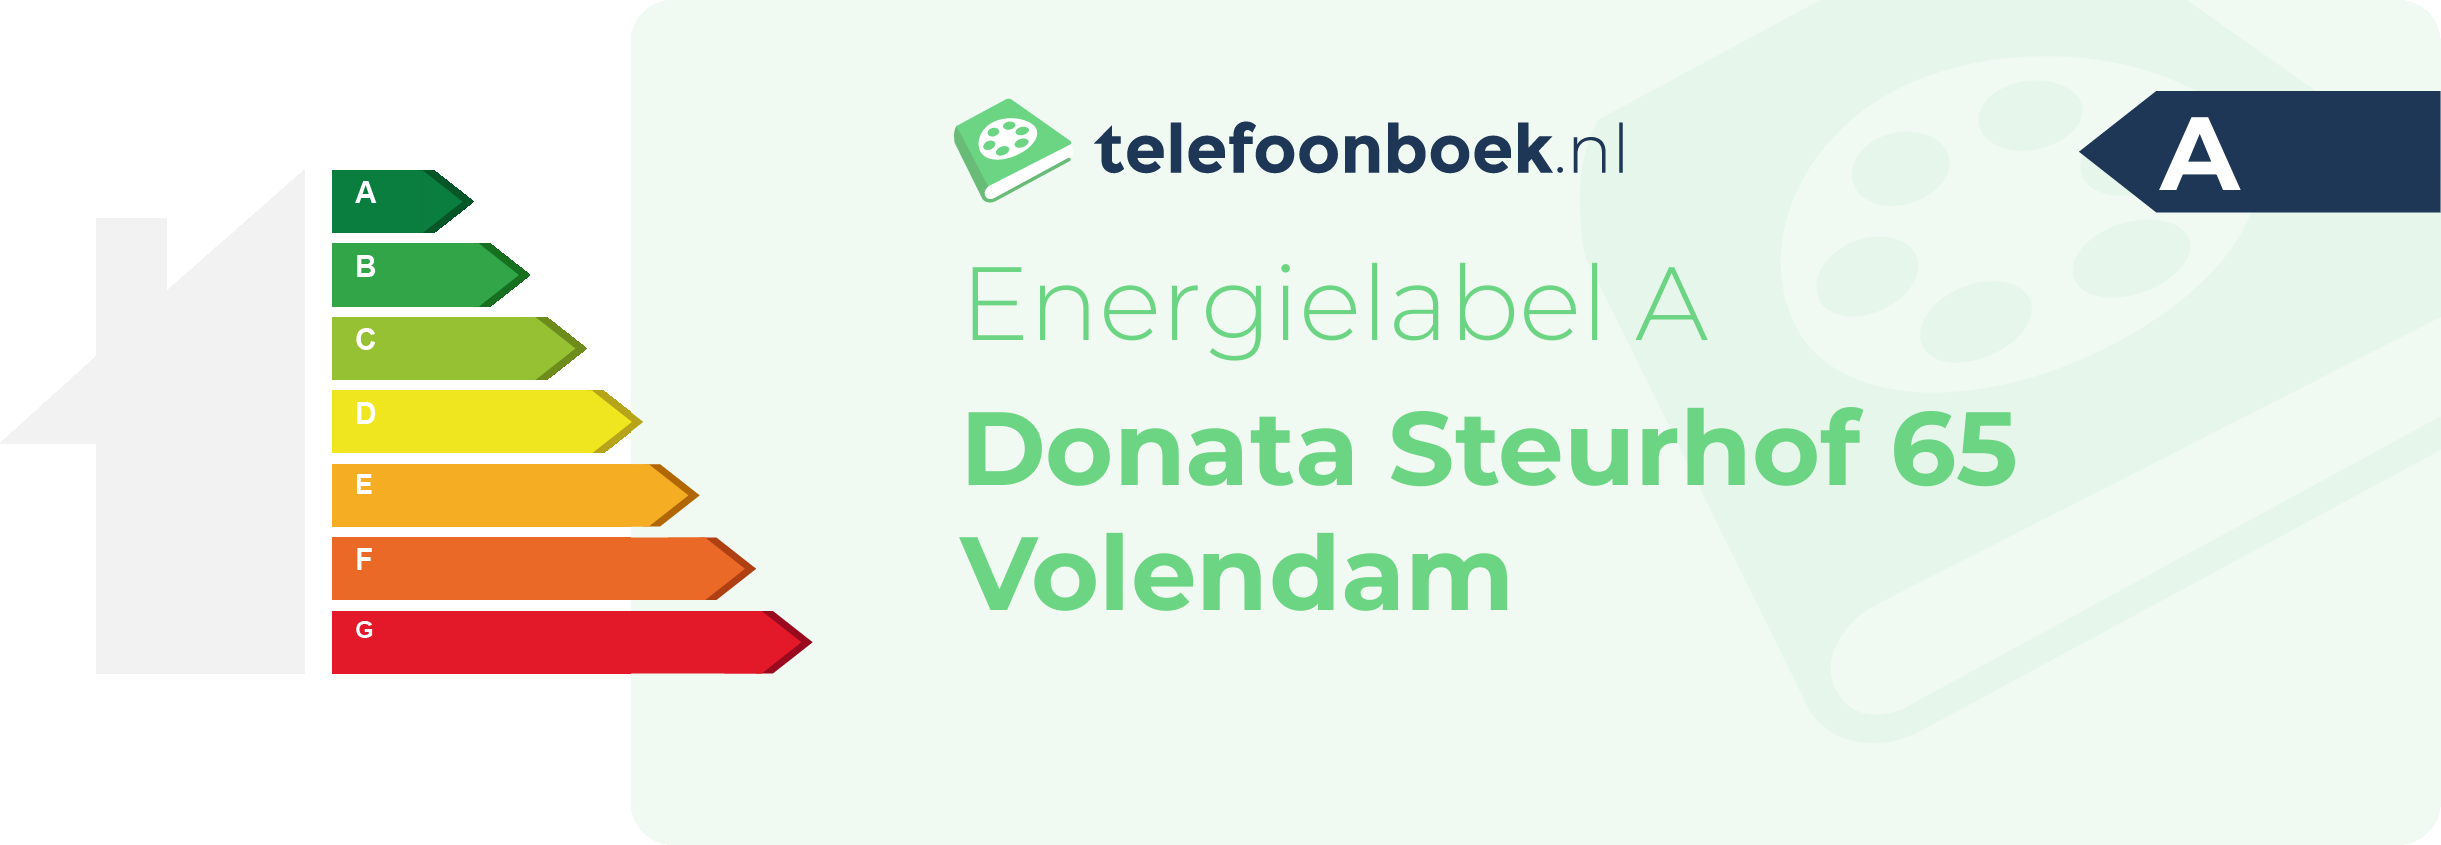 Energielabel Donata Steurhof 65 Volendam